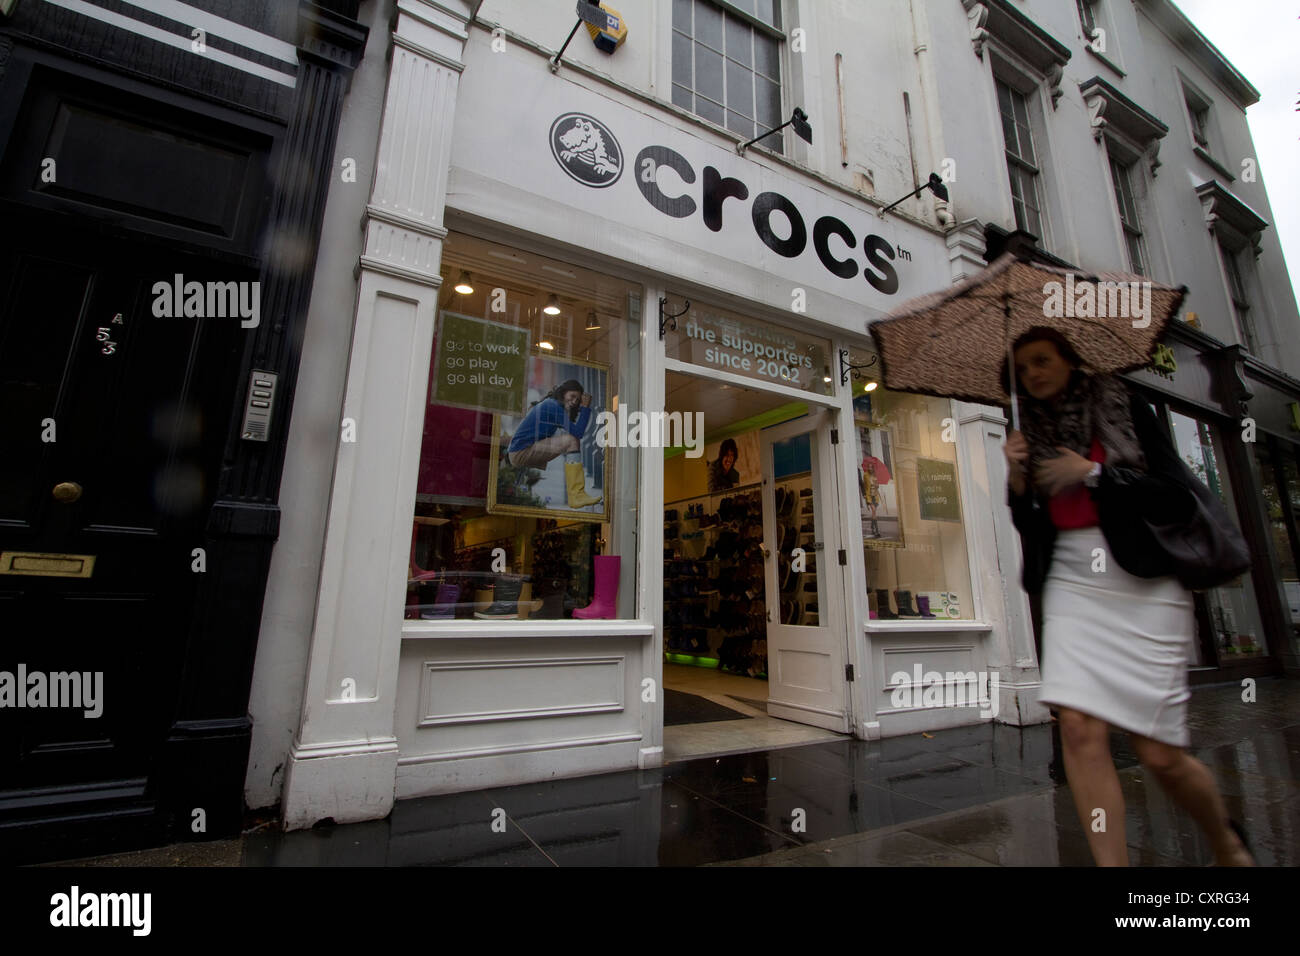 Crocs shoe shop, Kings Road London Stock Photo - Alamy